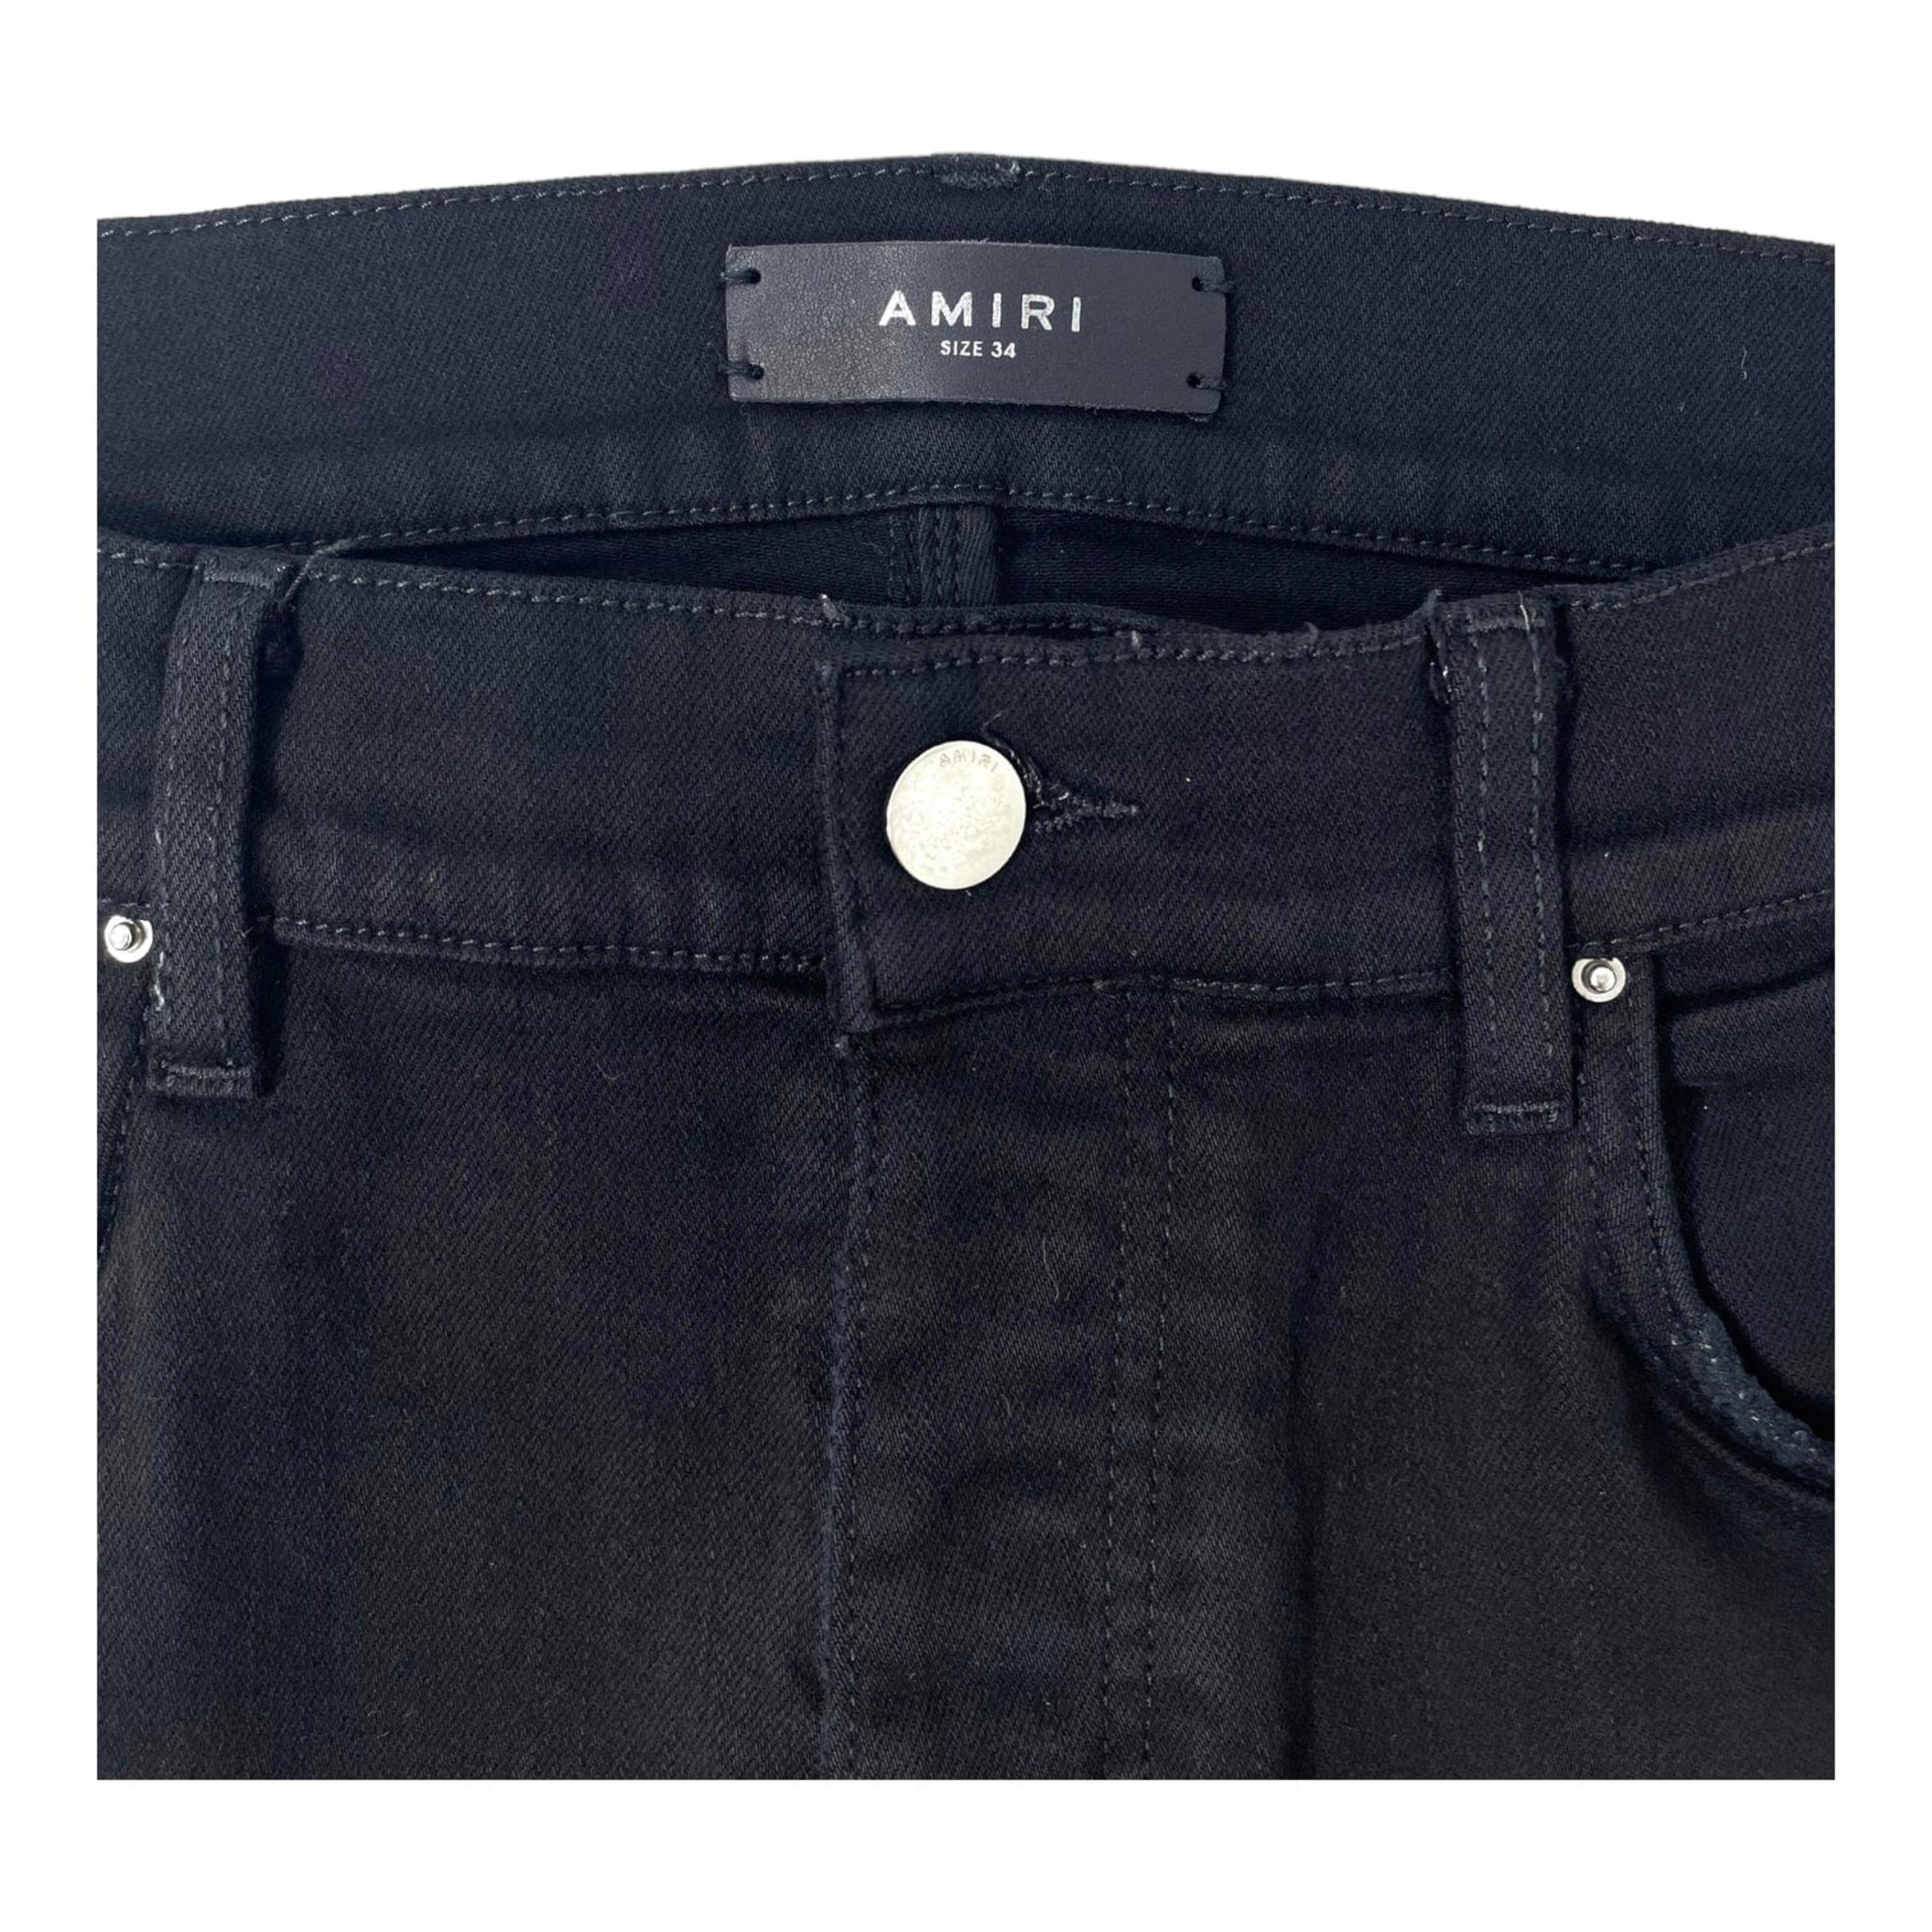 Alternate View 3 of Amiri Crystal Painter Jeans Black Pre-Owned